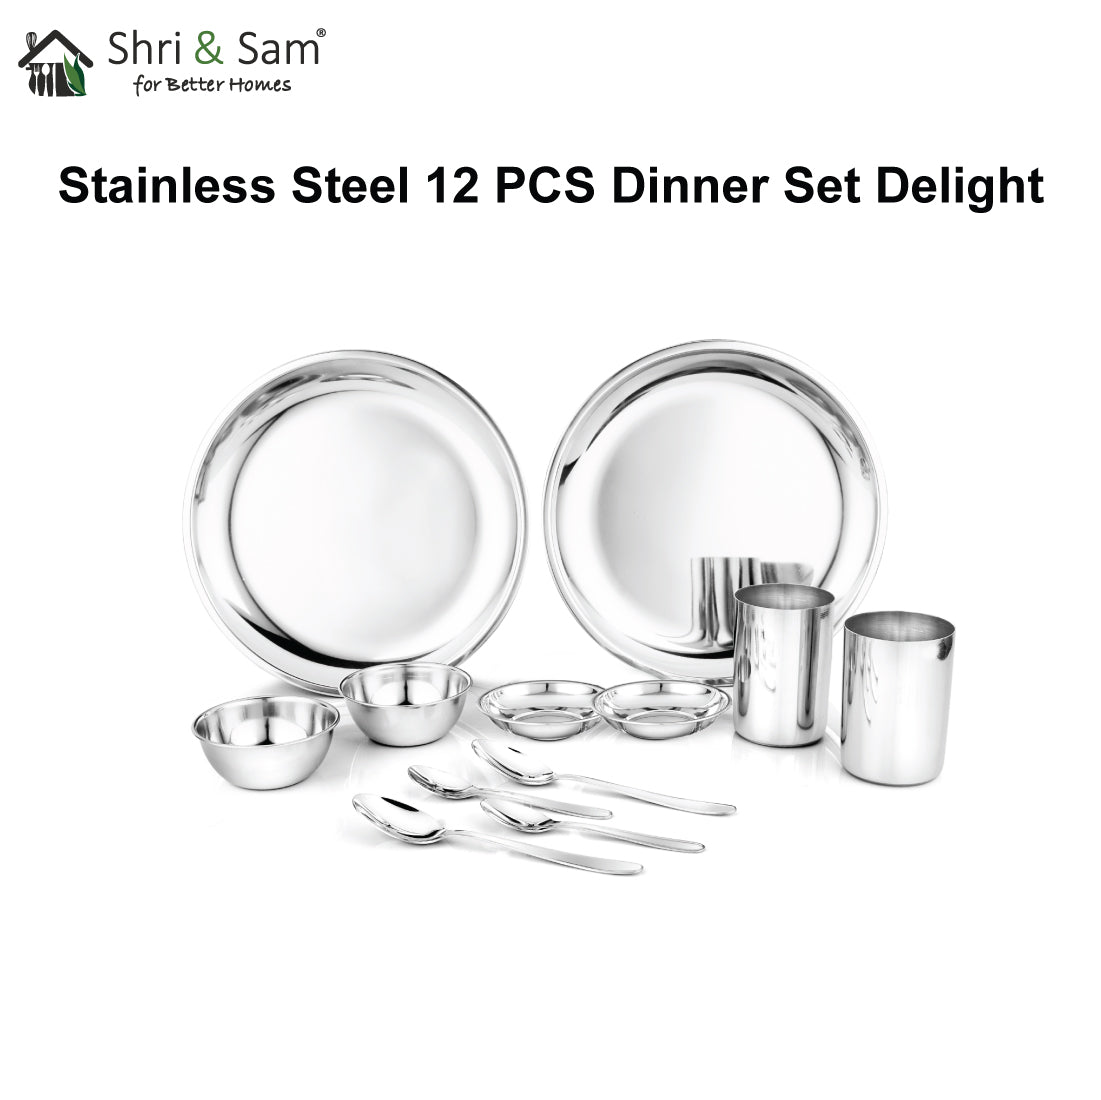 Stainless Steel 12 PCS Dinner Set (2 People) Delight